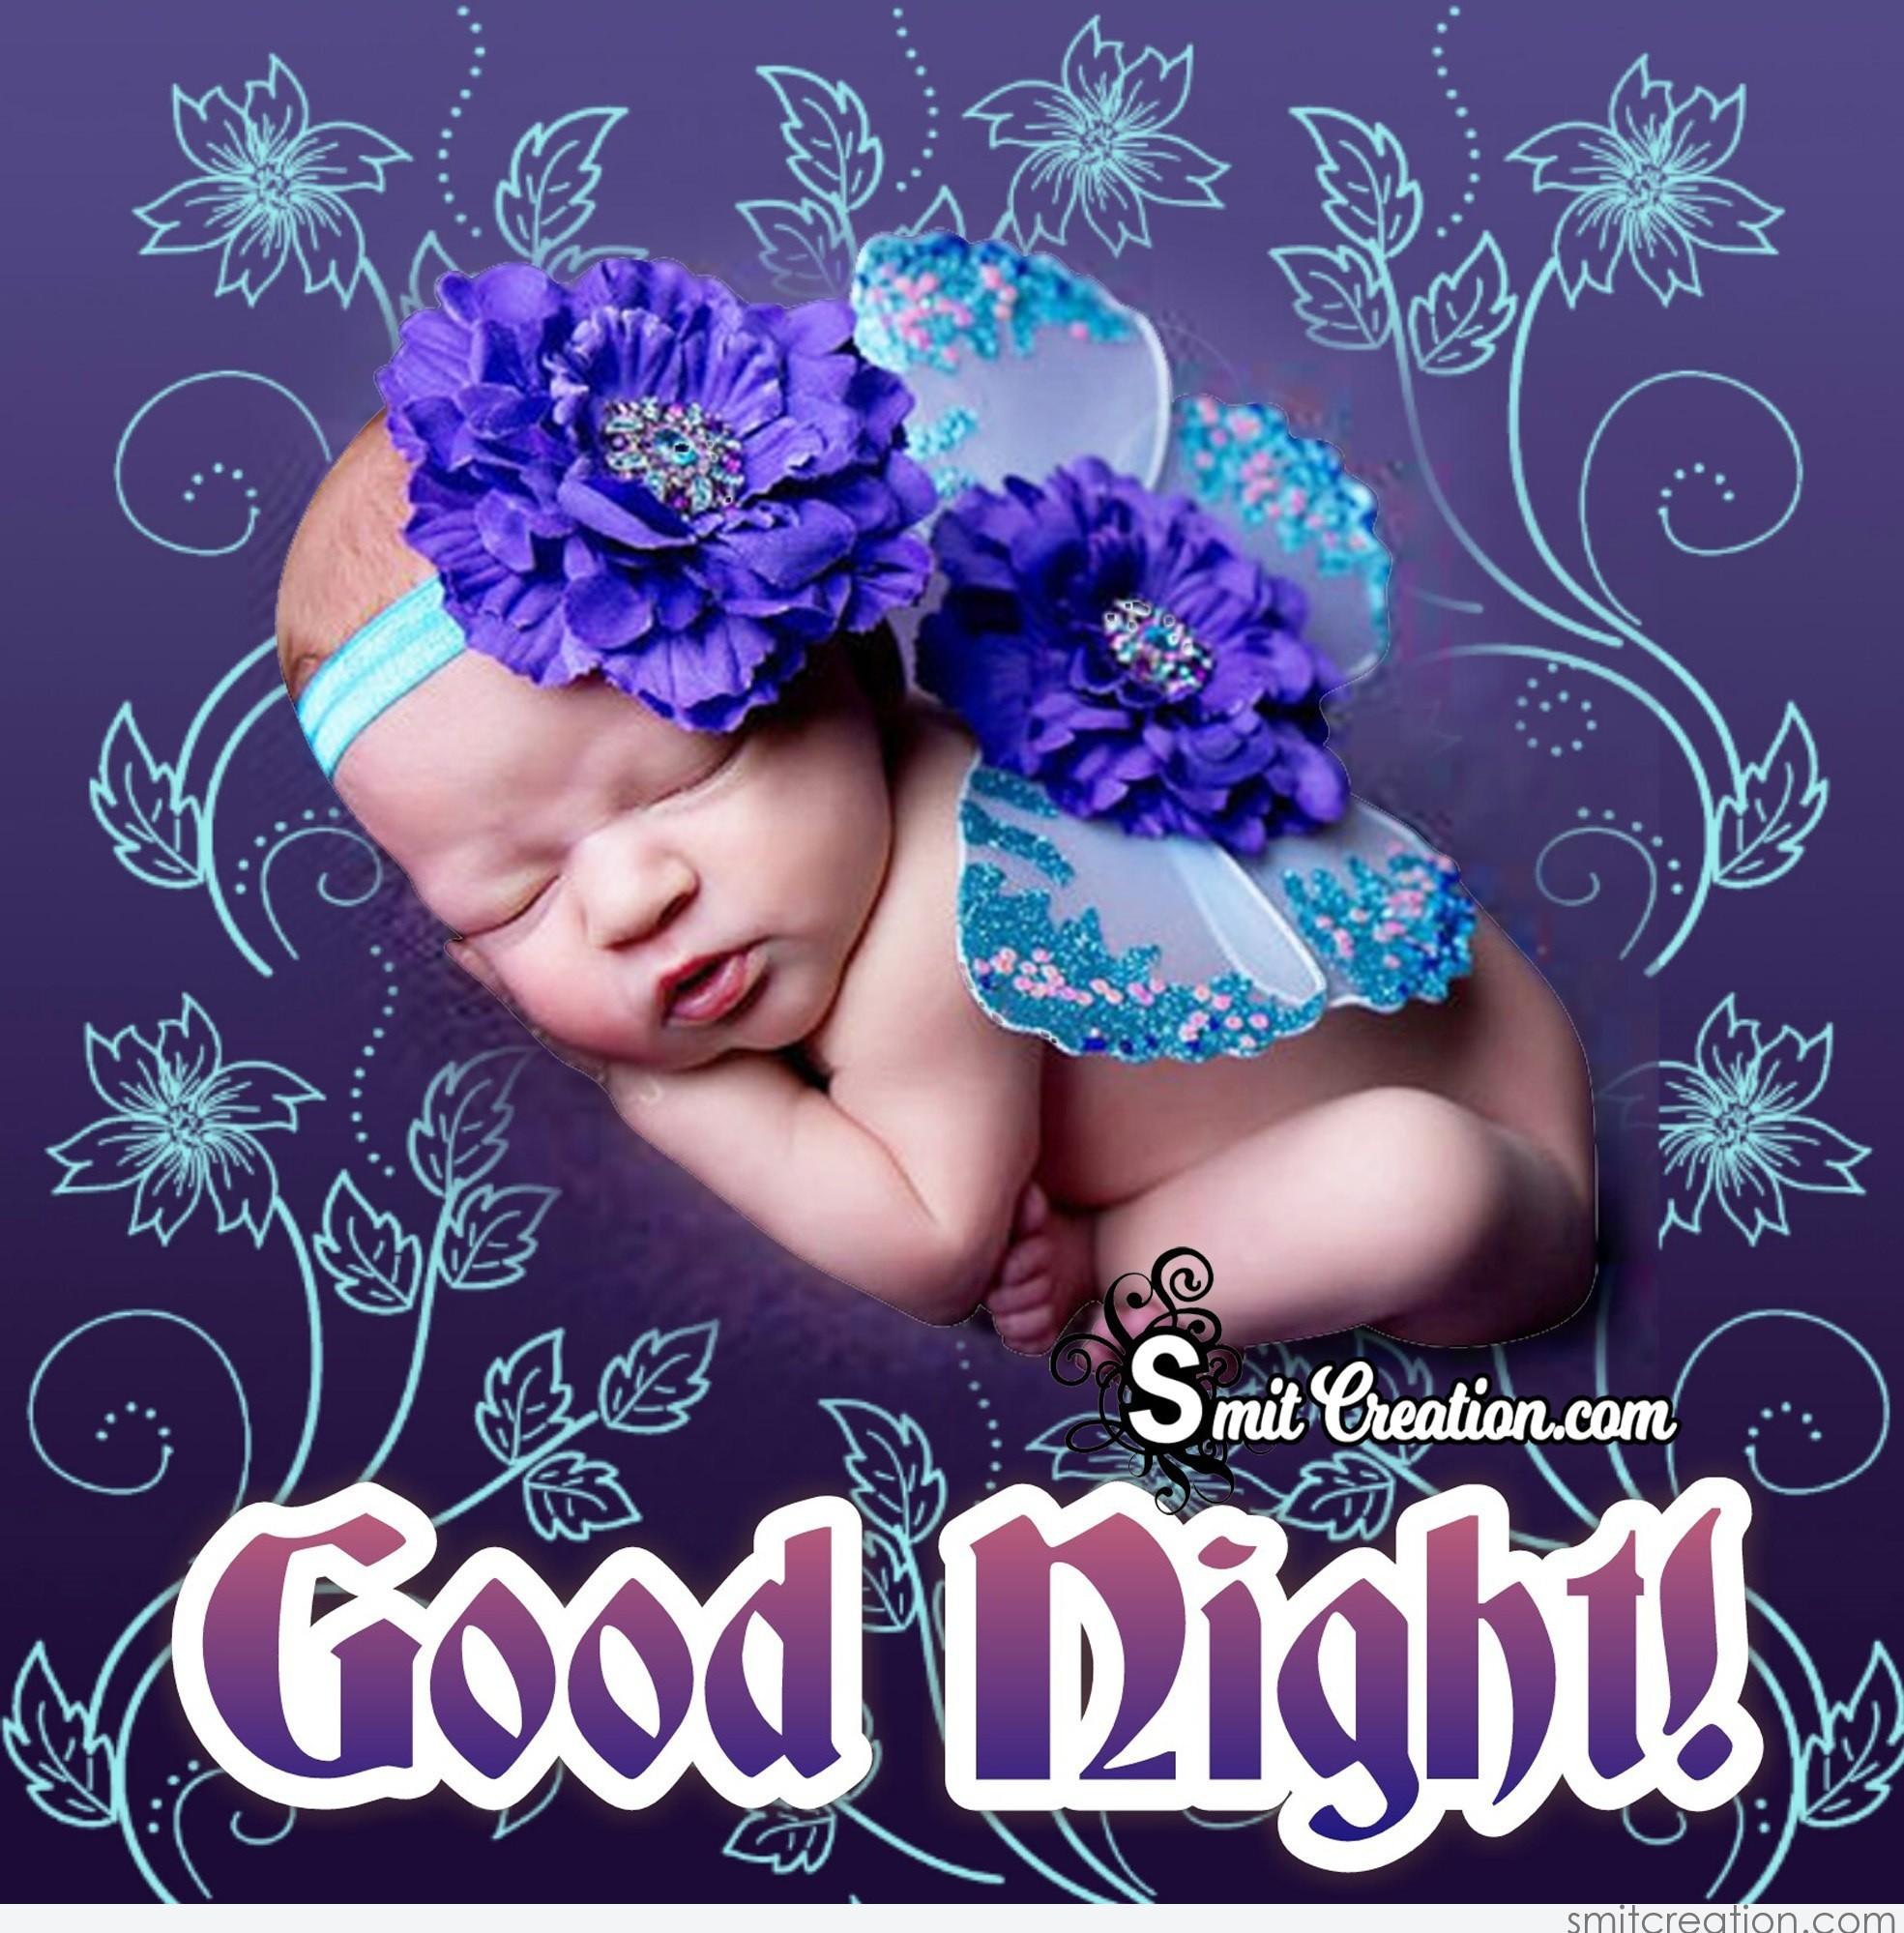 Good Night Beautiful Baby Image. 